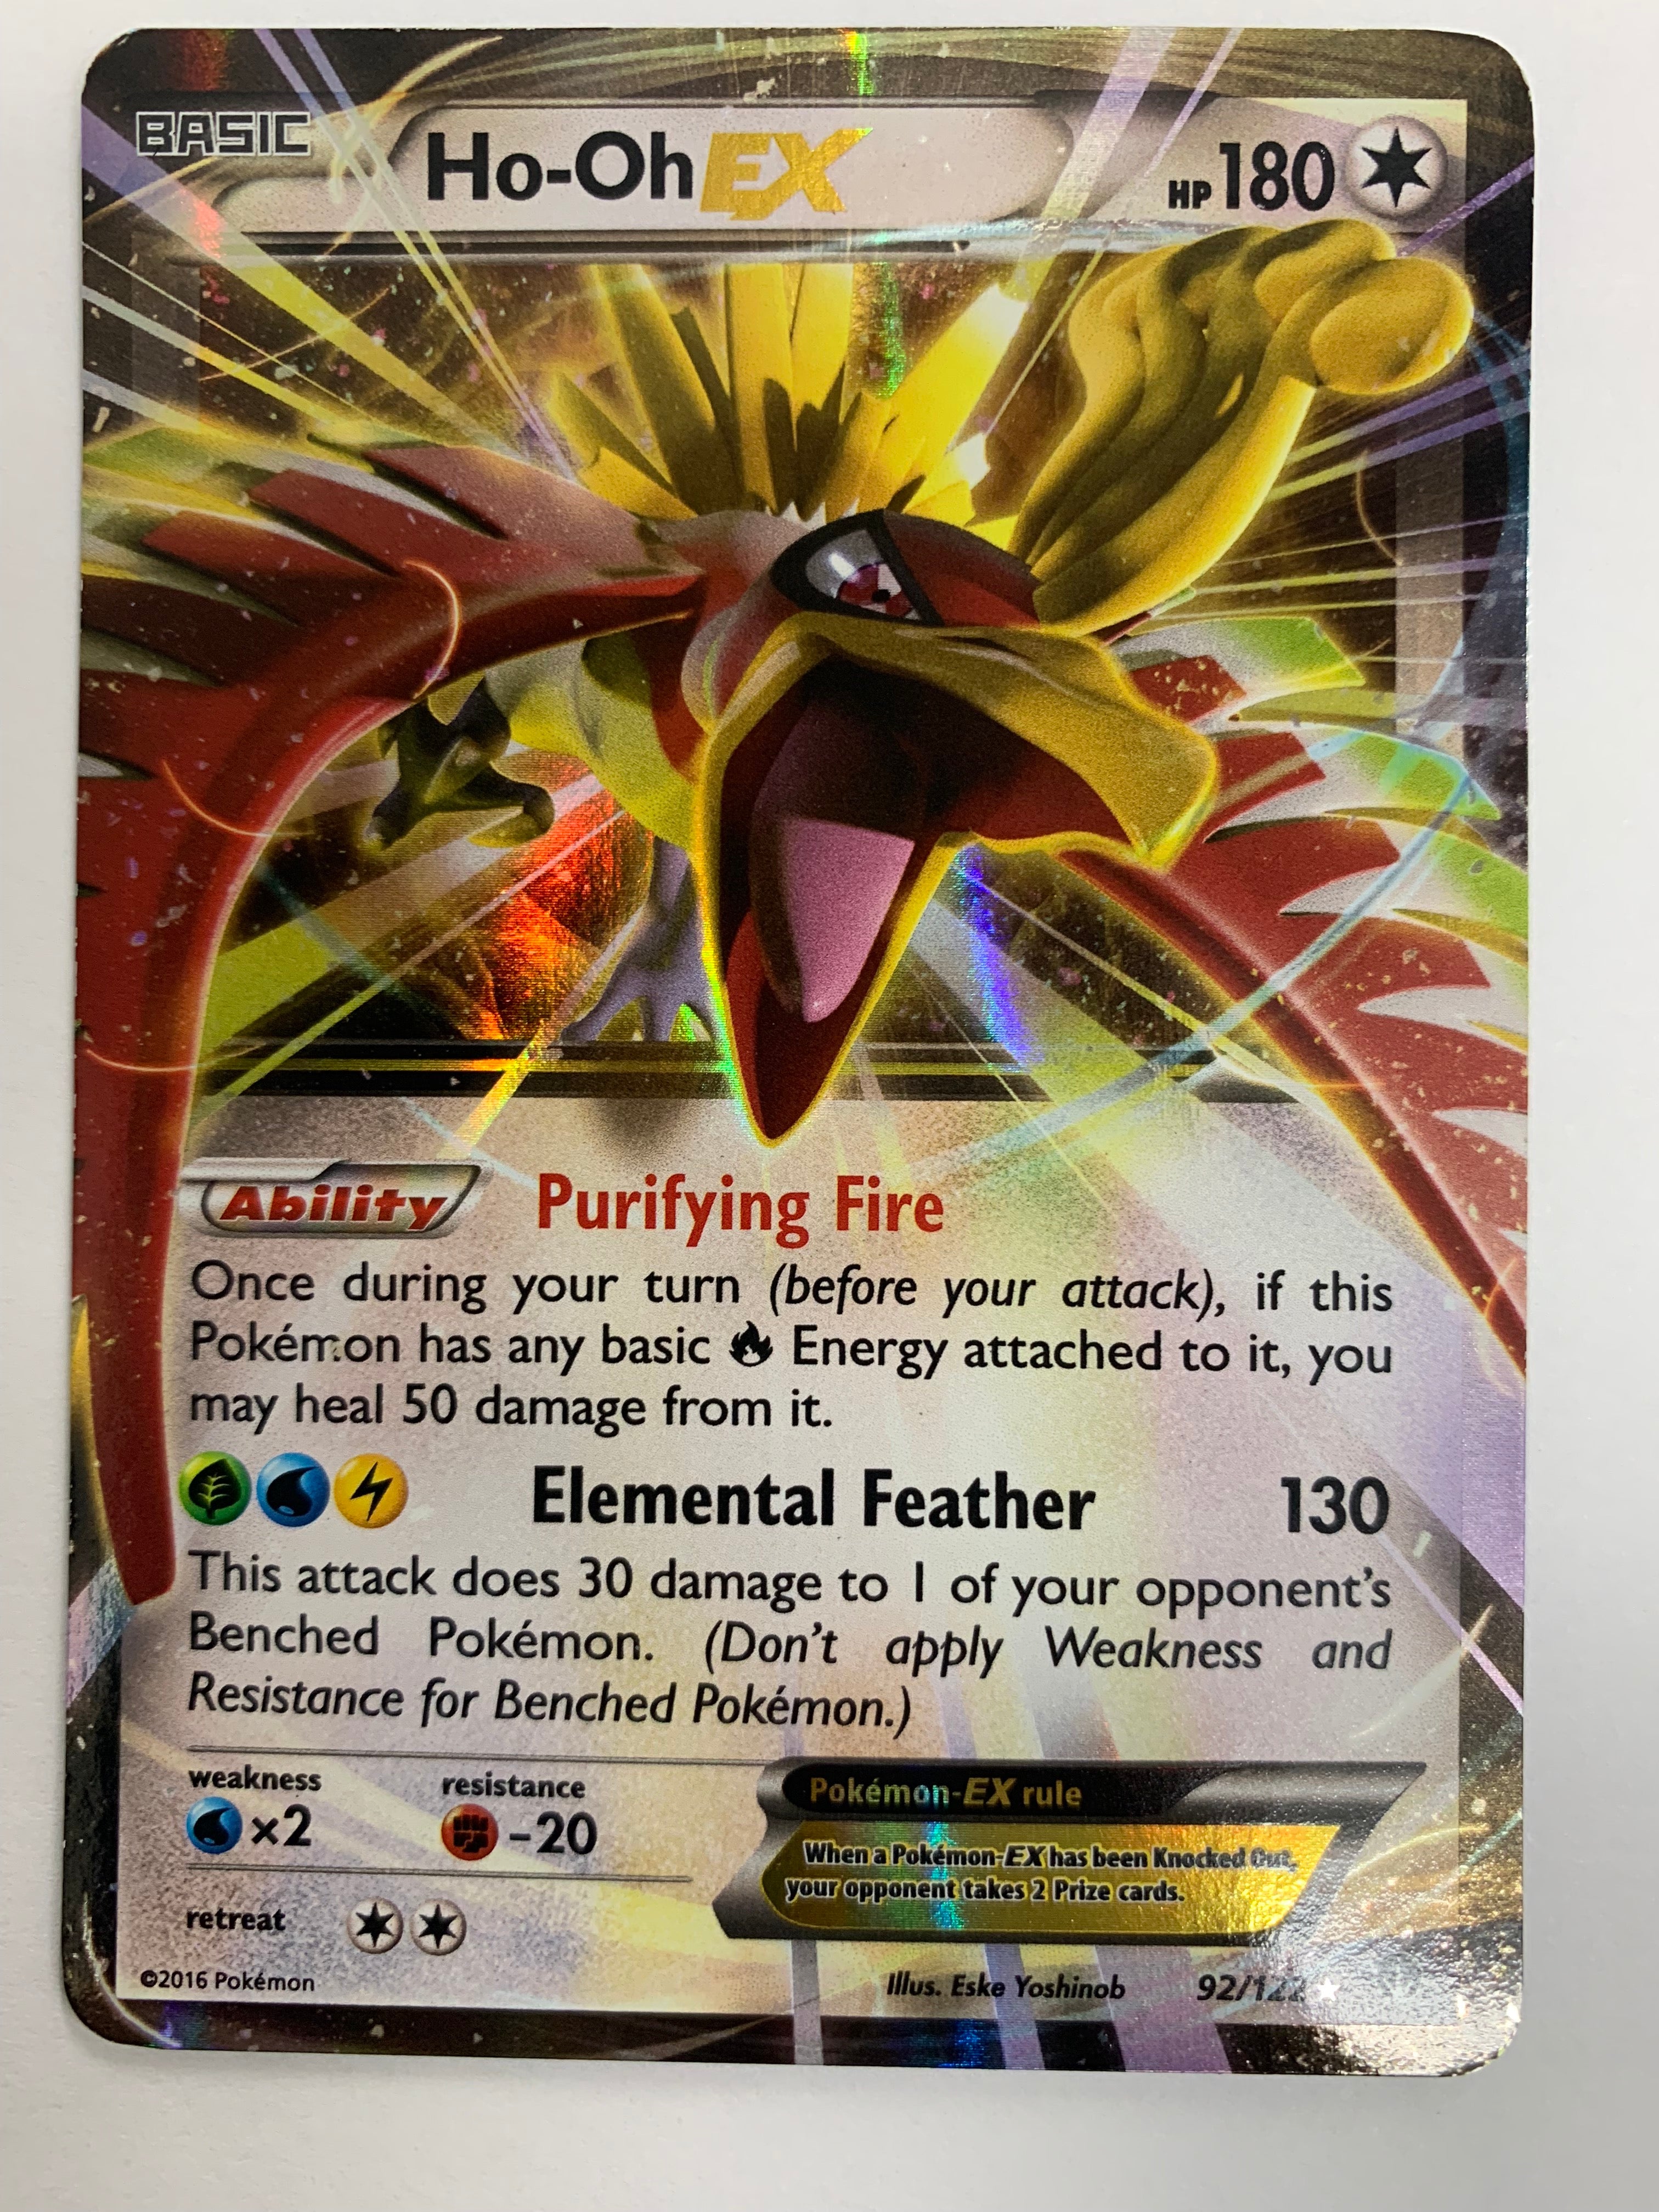 Ho-Oh EX - XY Breakpoint Pokémon card 92/122